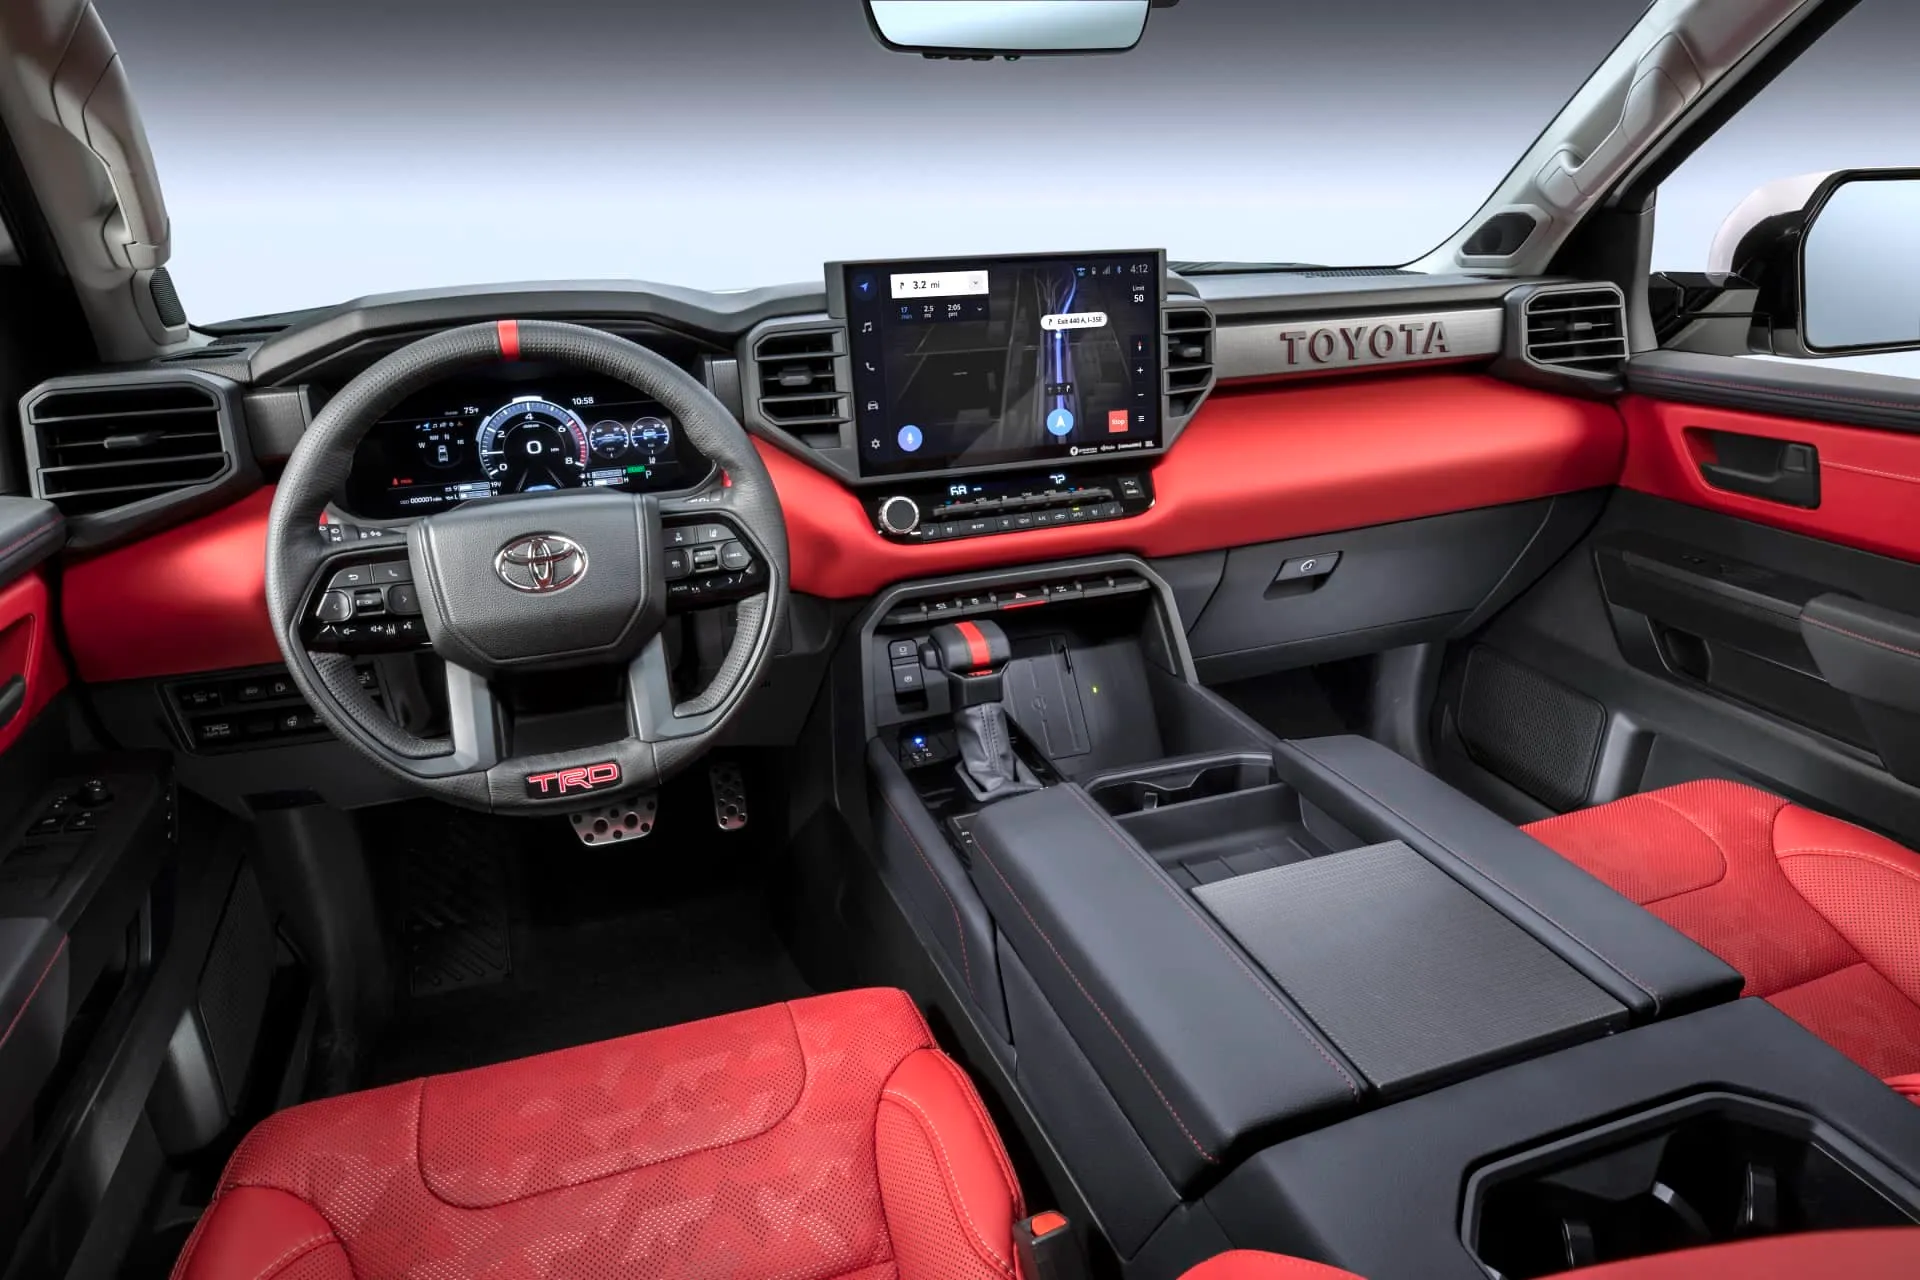 Tundra Toyota 2021 interior